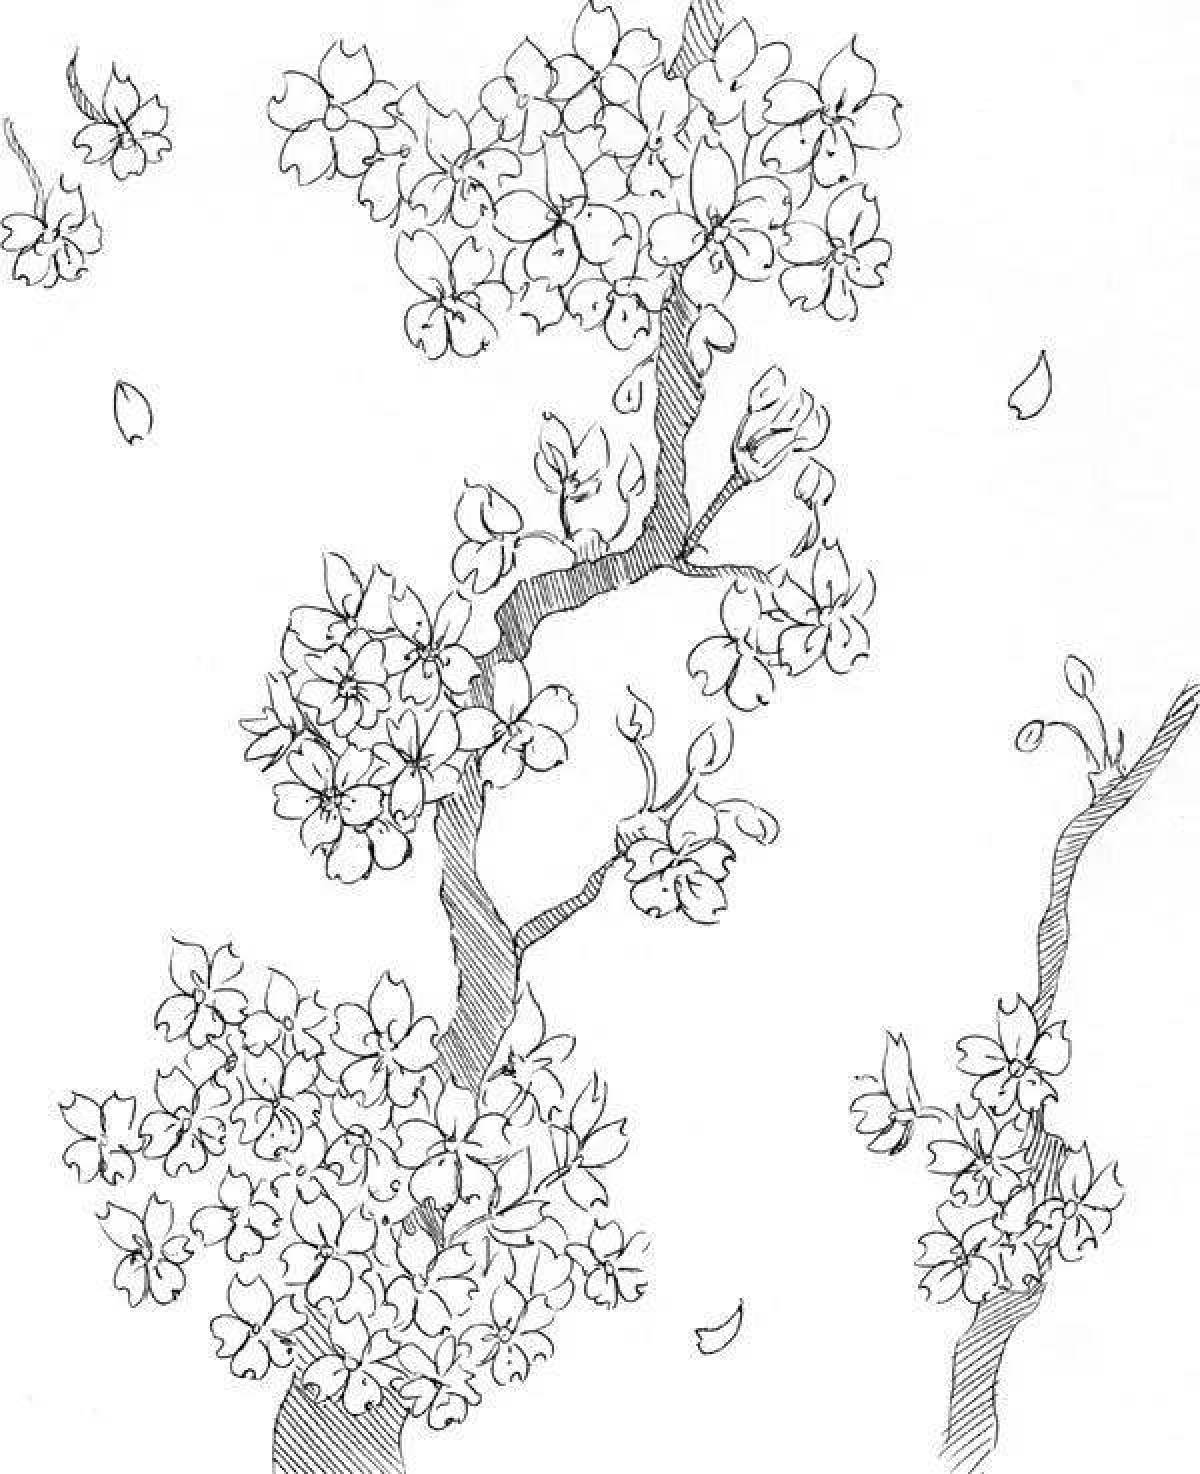 Exquisite sakura coloring page